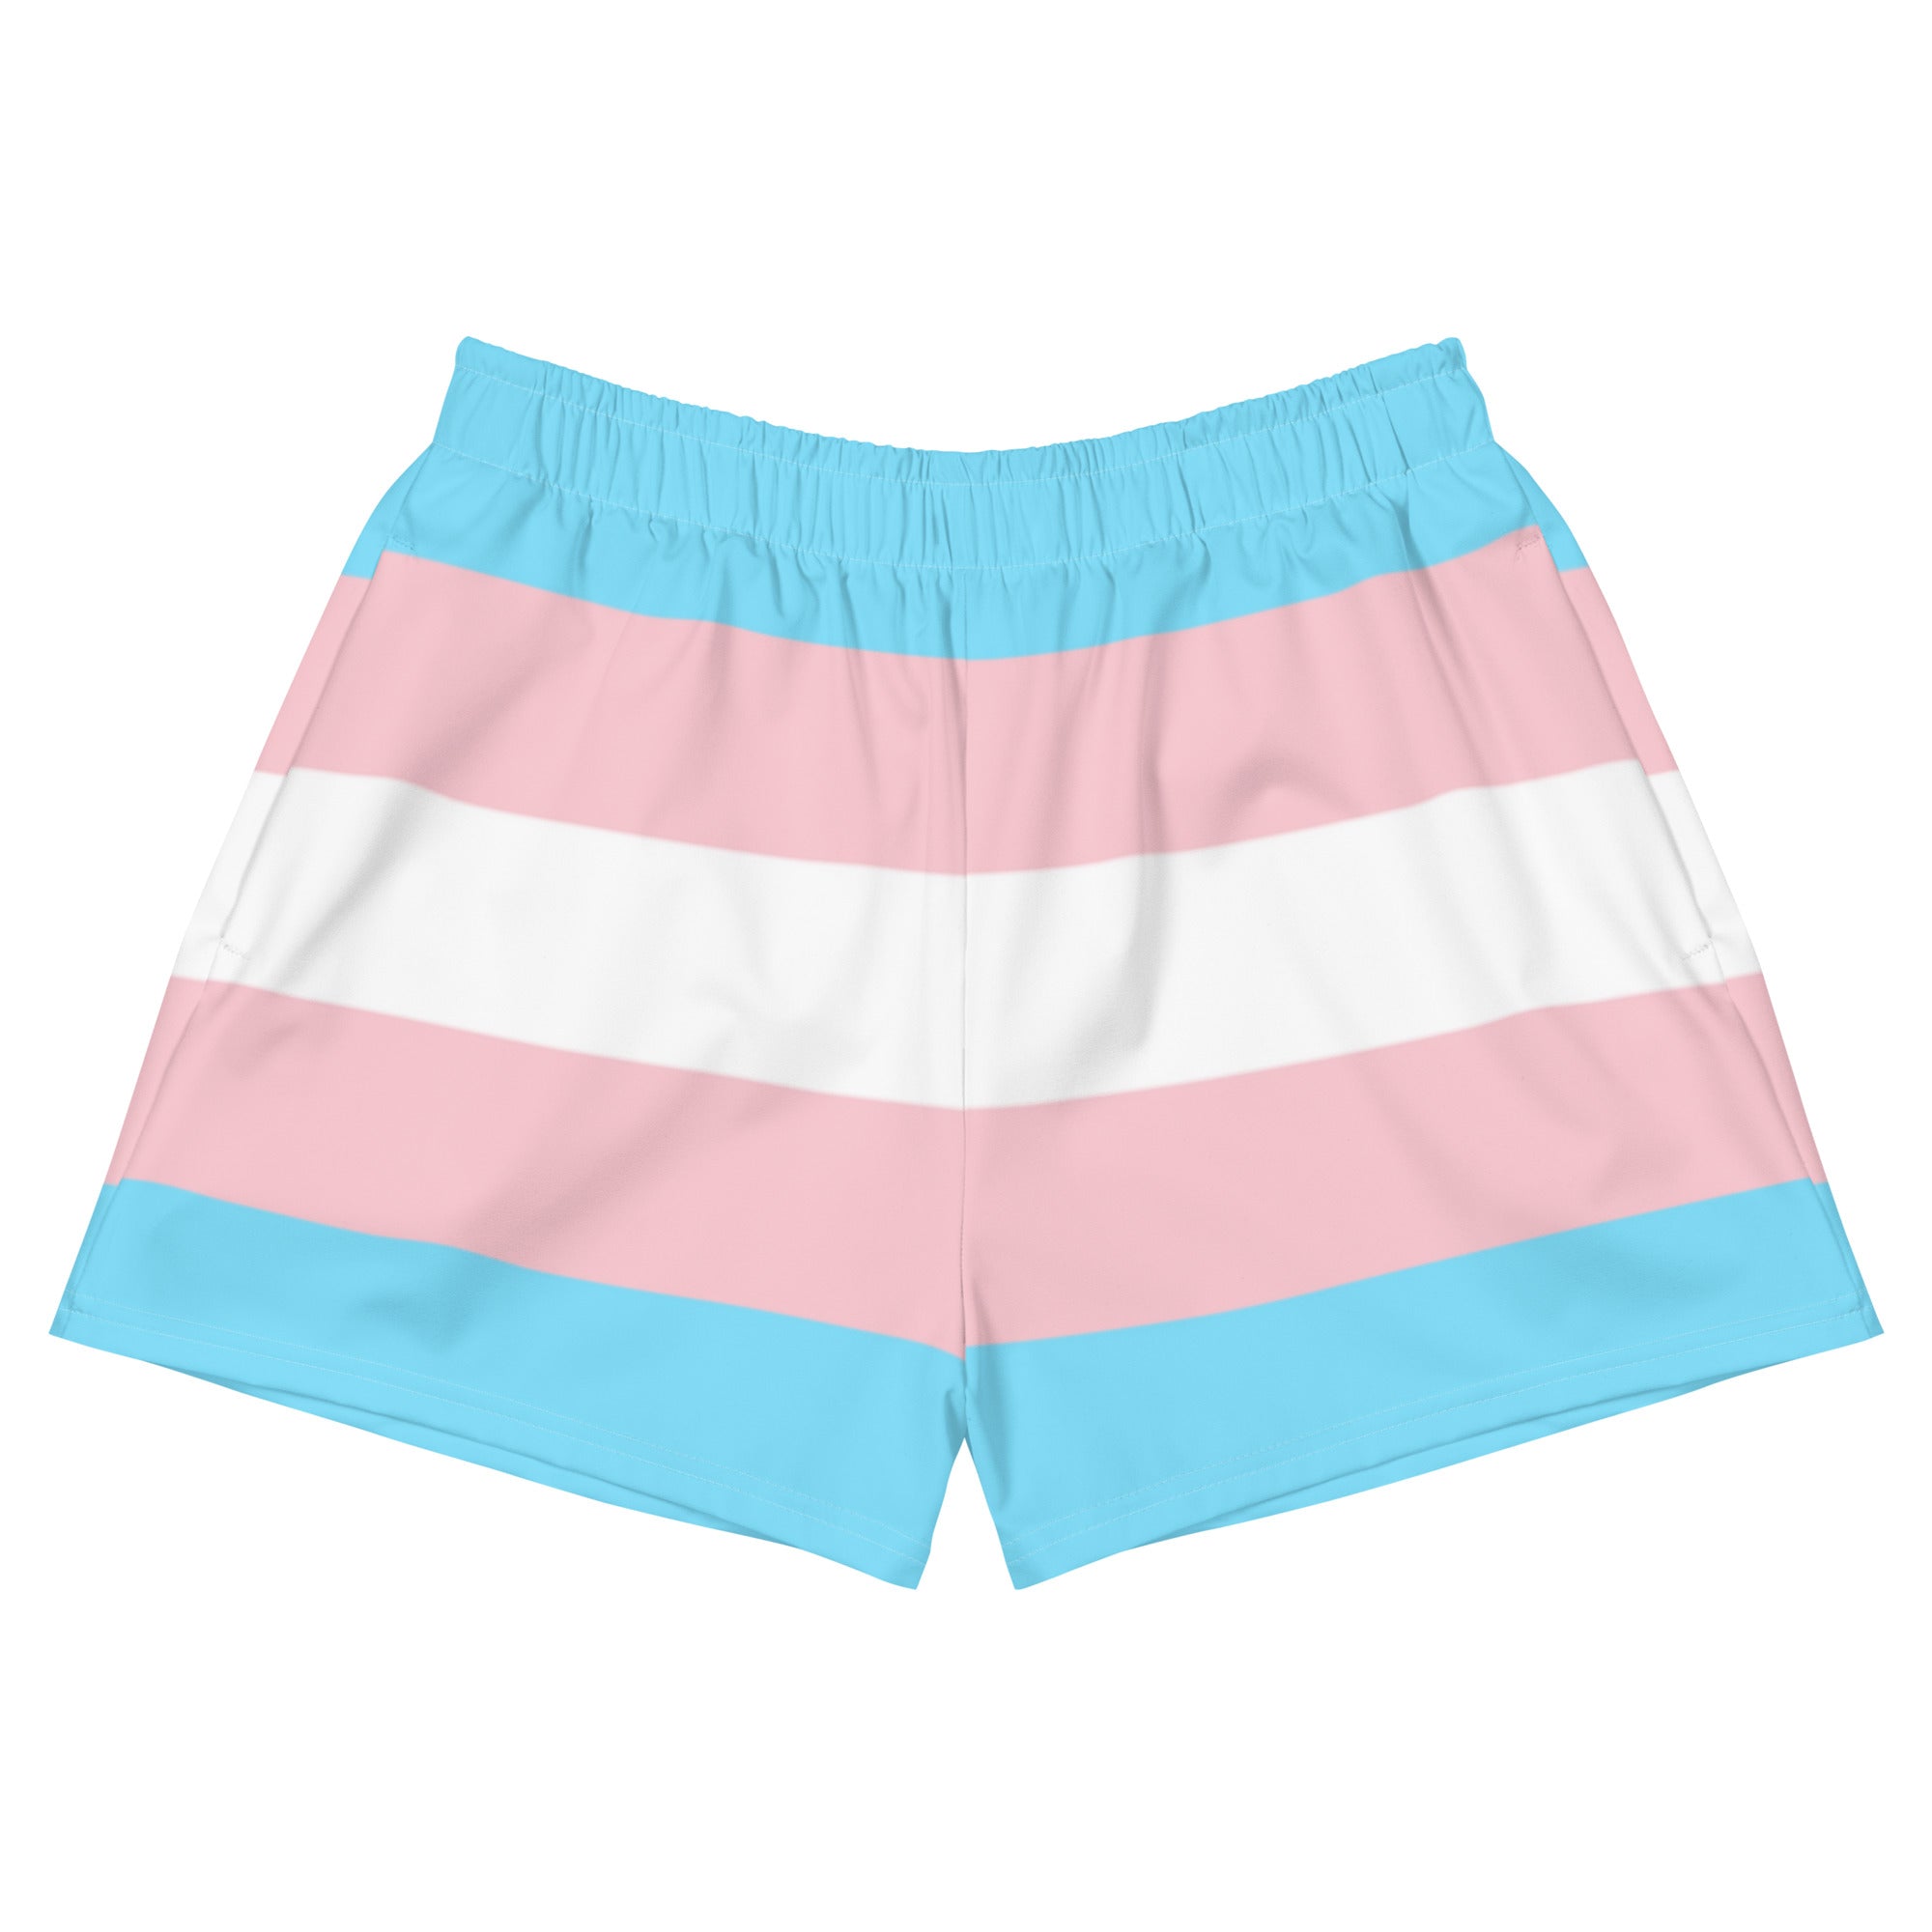 Transgender Flag Athletic Shorts